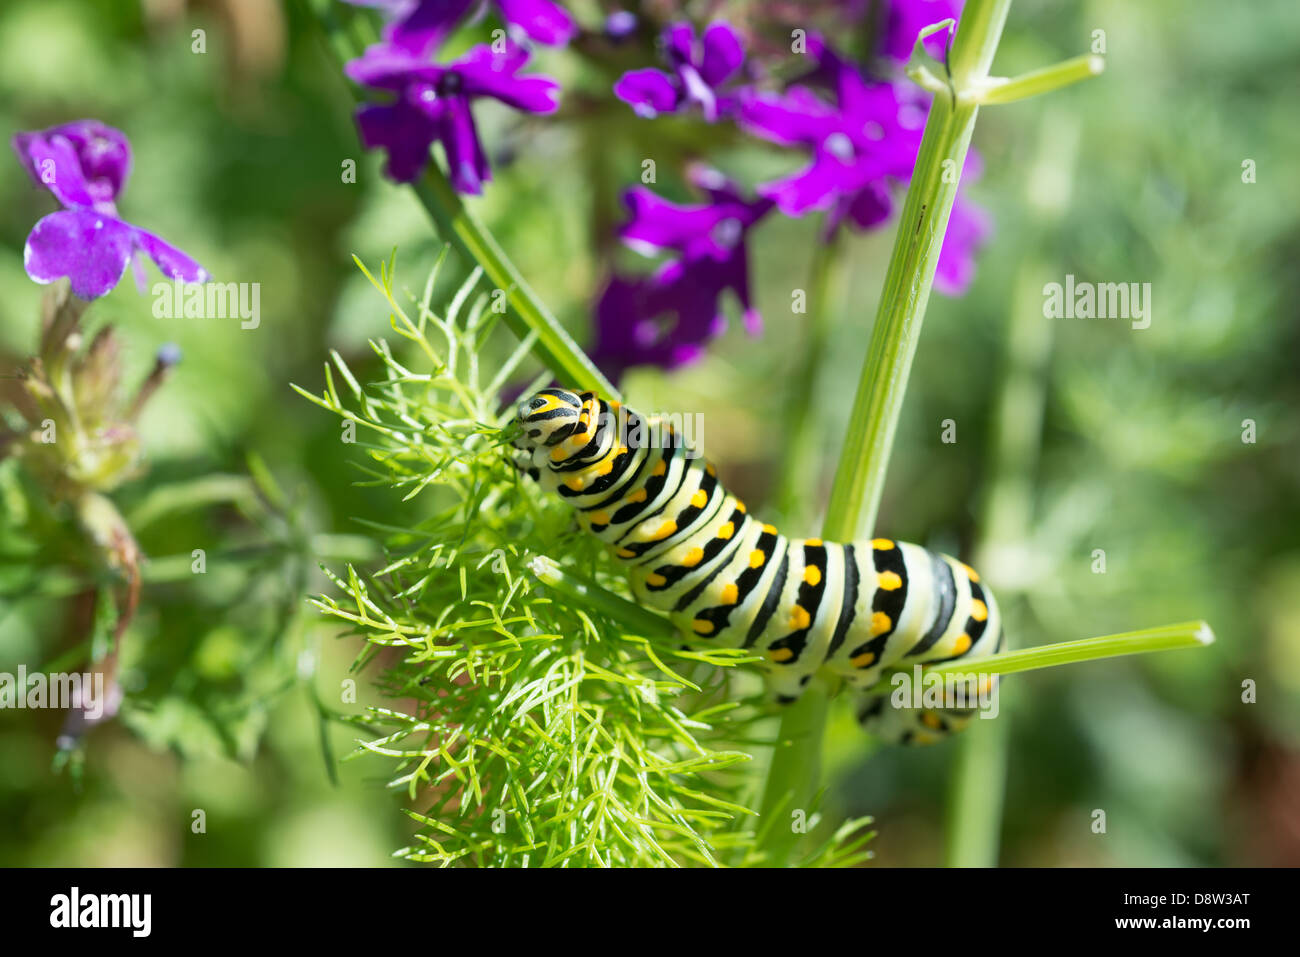 Black Swallowtail caterpillar feeding on fennel in garden with purple flowers. Stock Photo